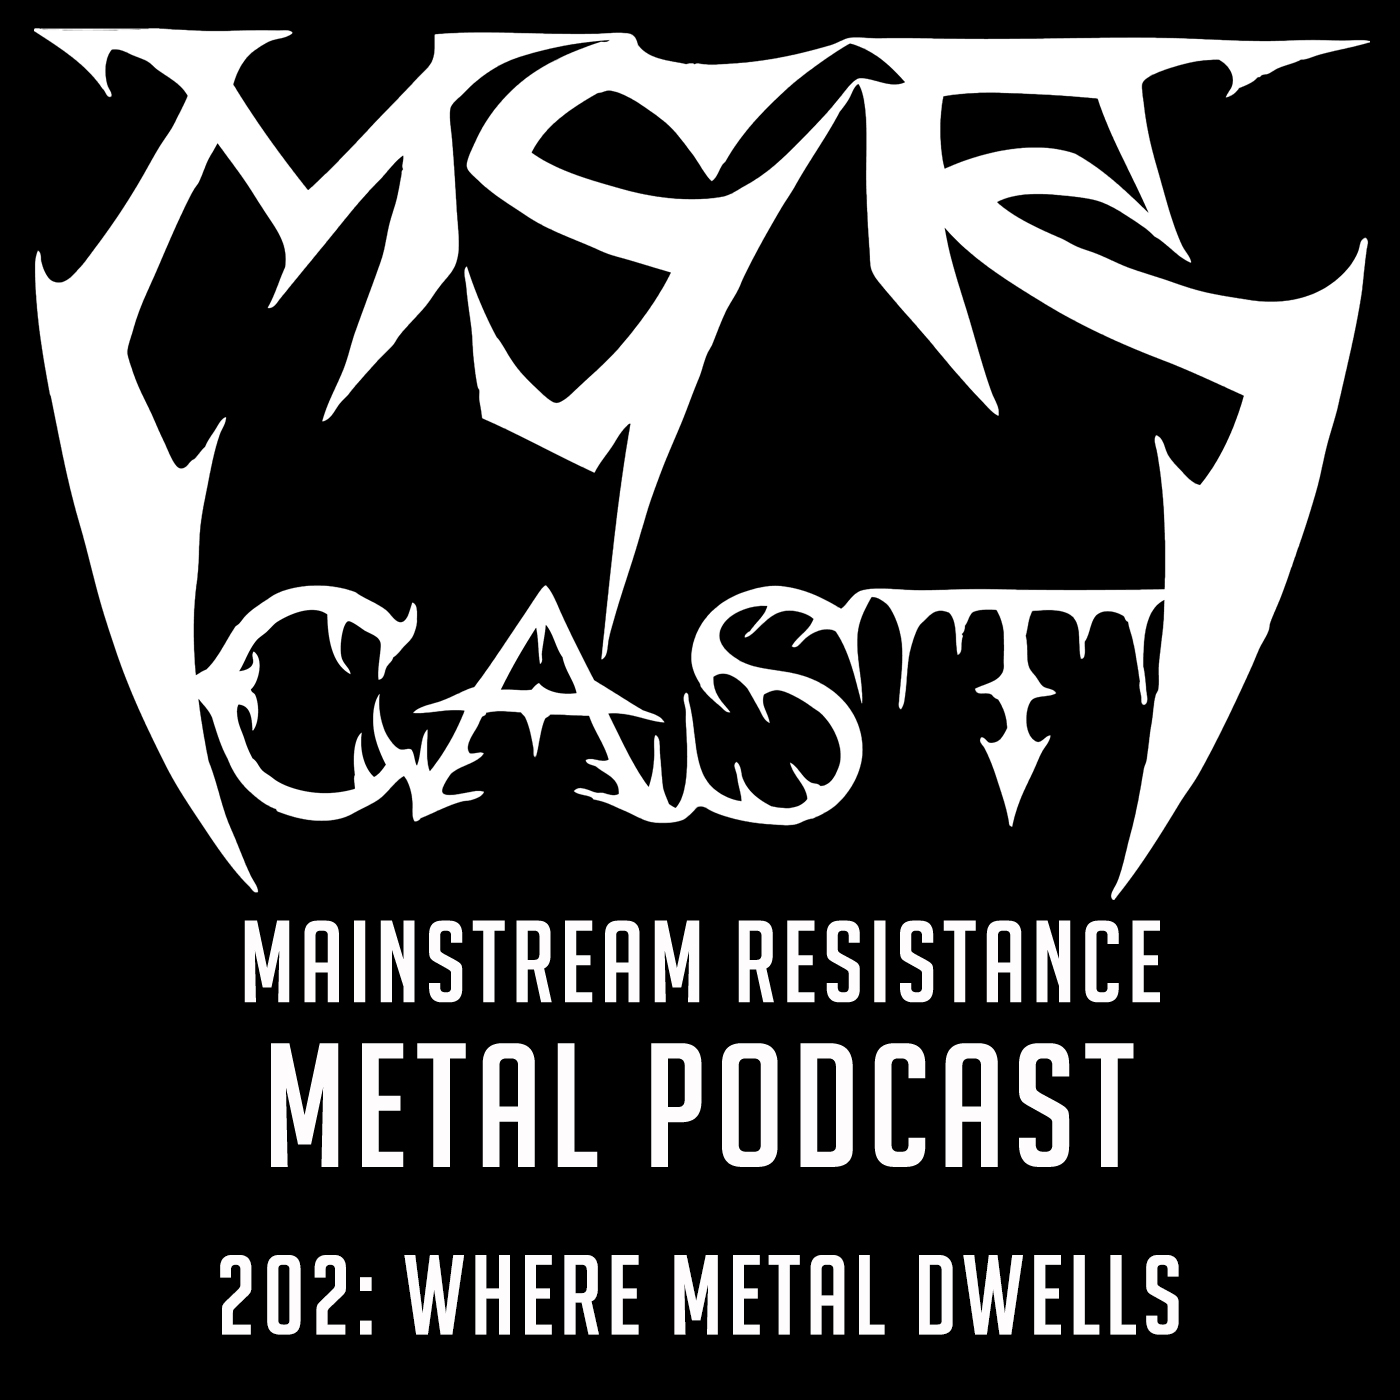 MSRcast 202: Where Metal Dwells